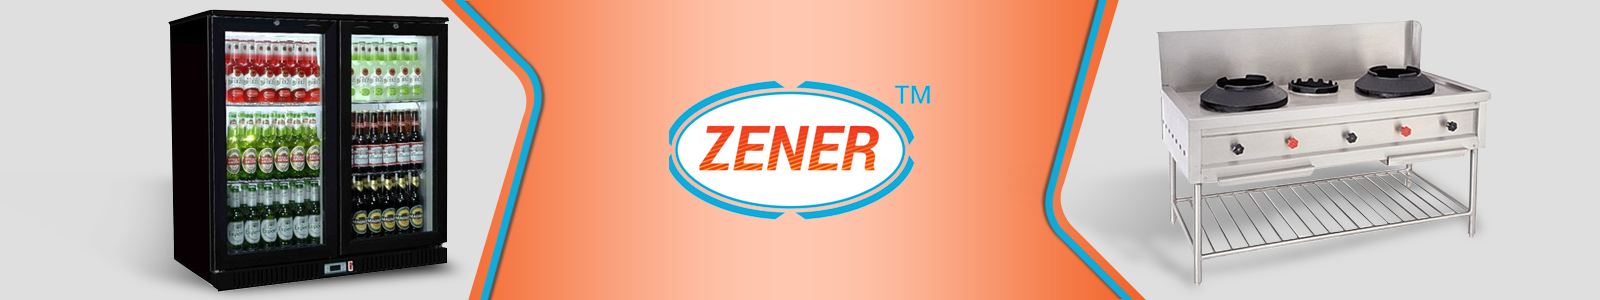 ZENER REFRIGERATION PVT. LTD